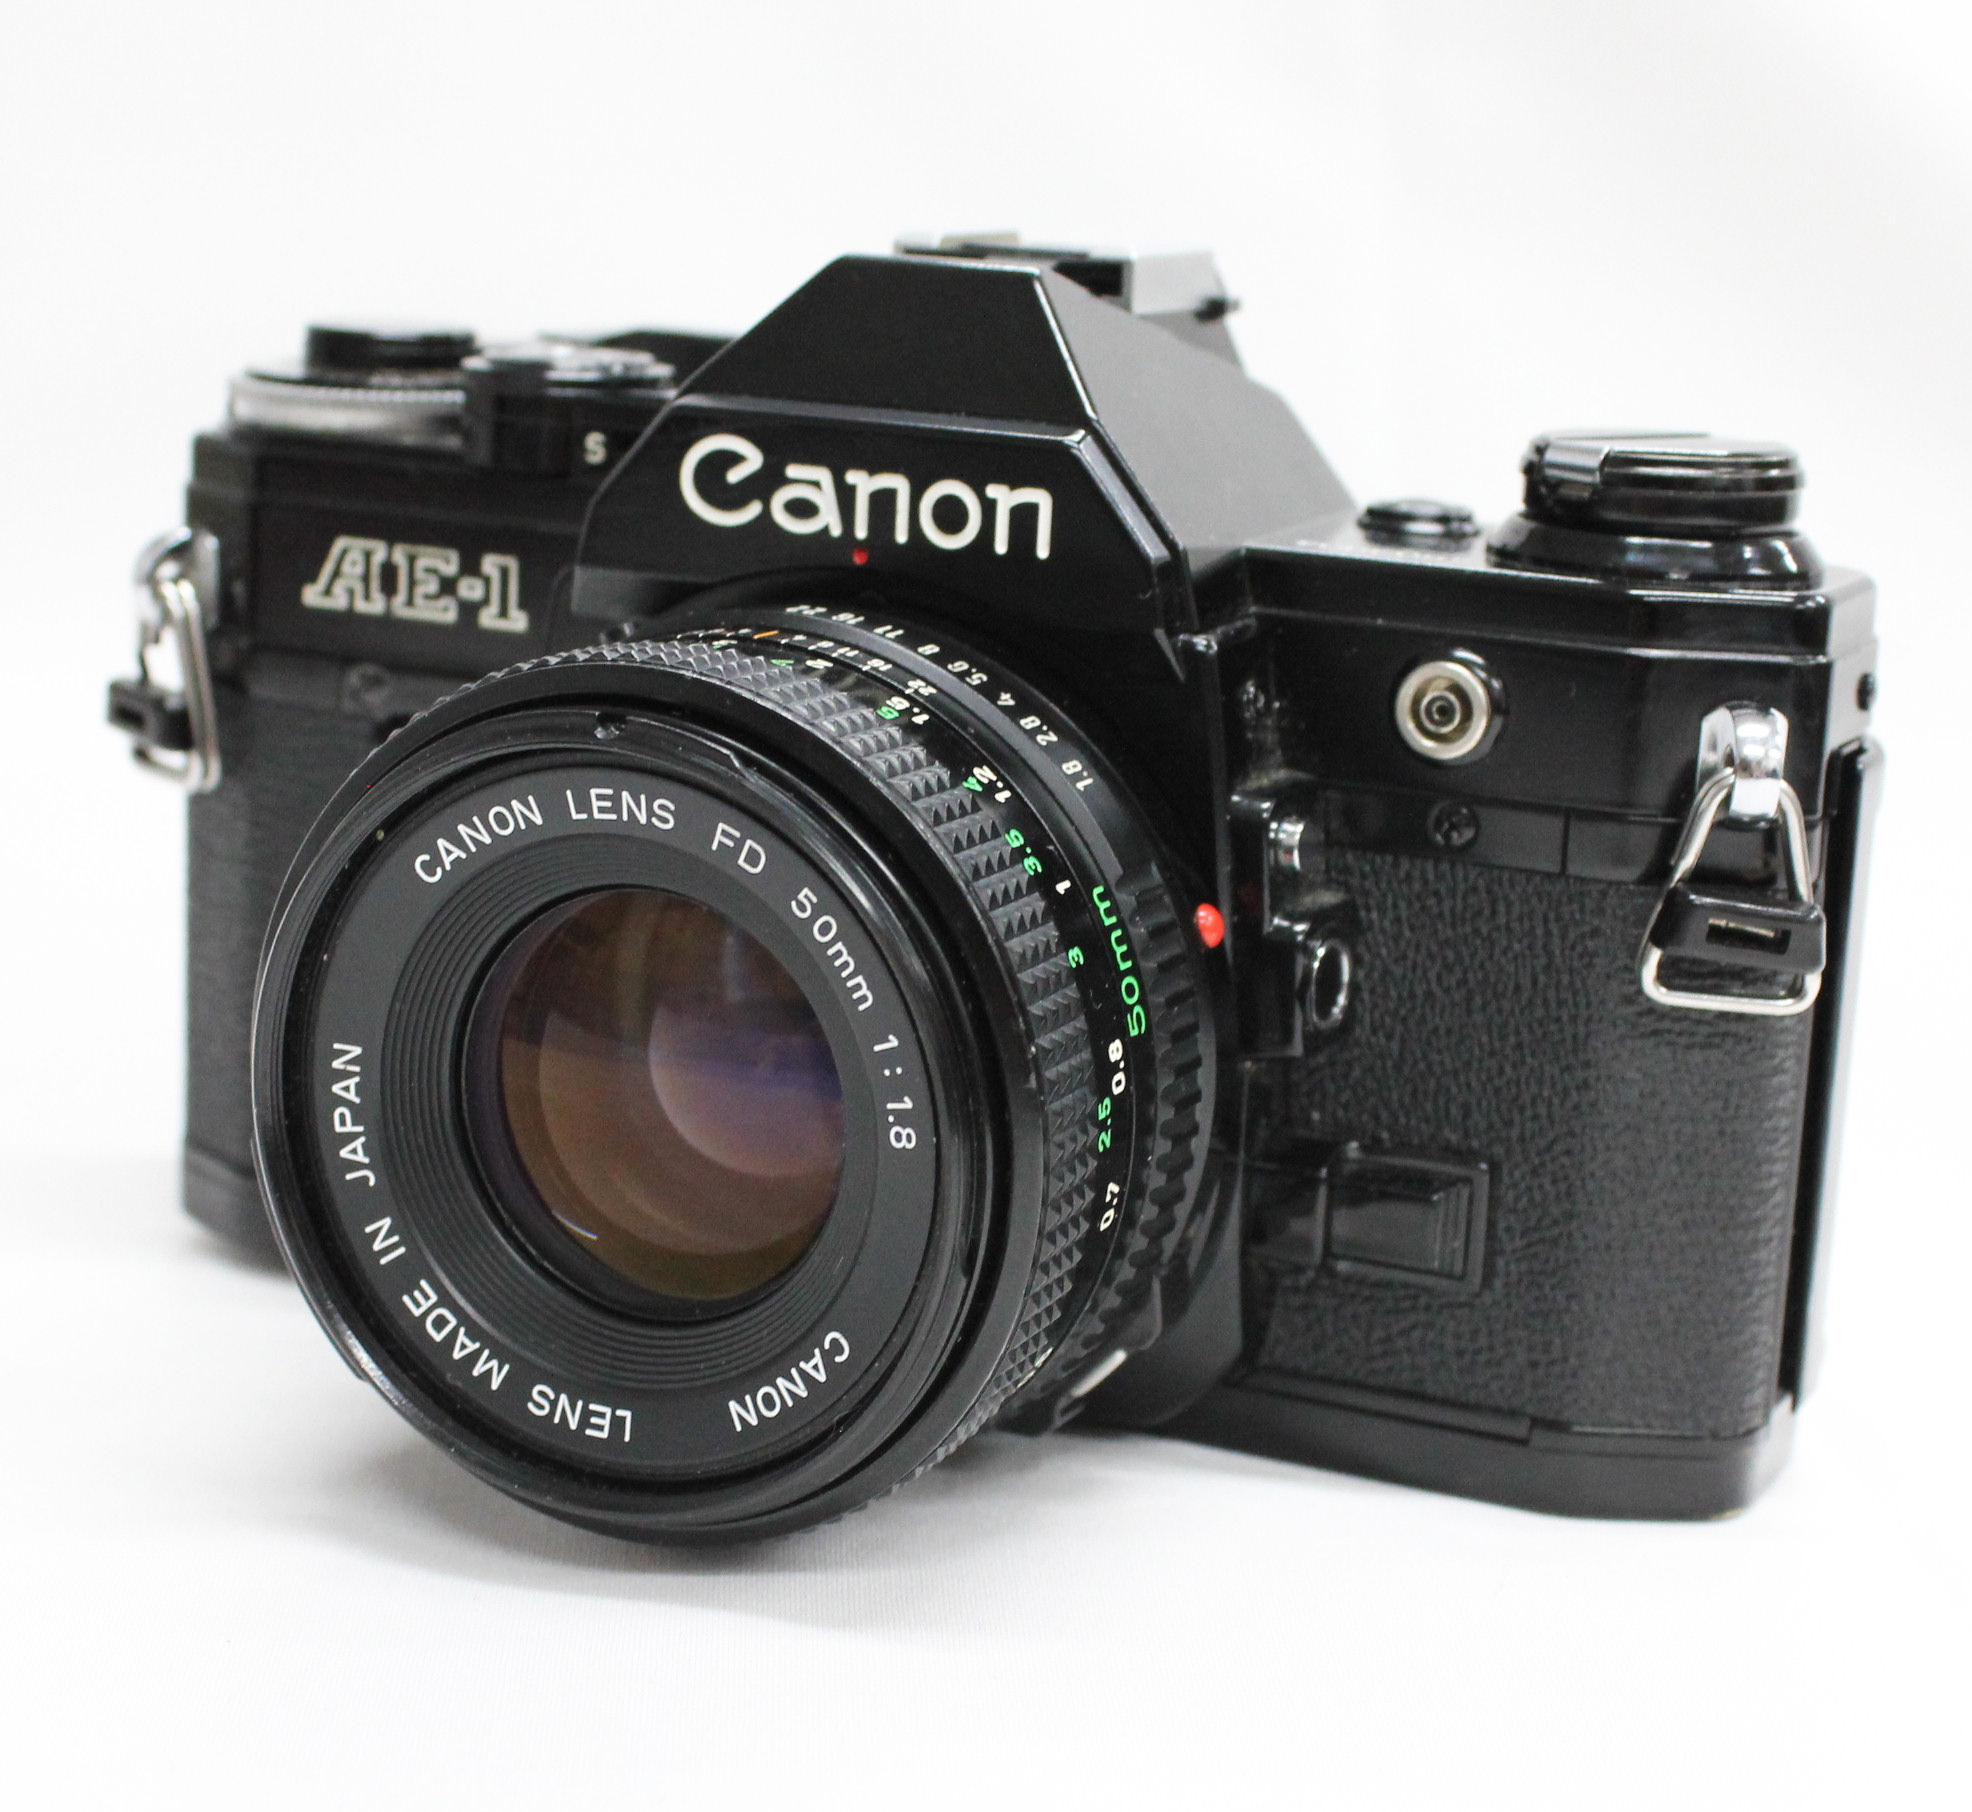 Japan Used Camera Shop | [Ex+++++] Canon AE-1 35mm SLR Film Camera + Bonus New FD 50mm F/1.8 Lens from Japan